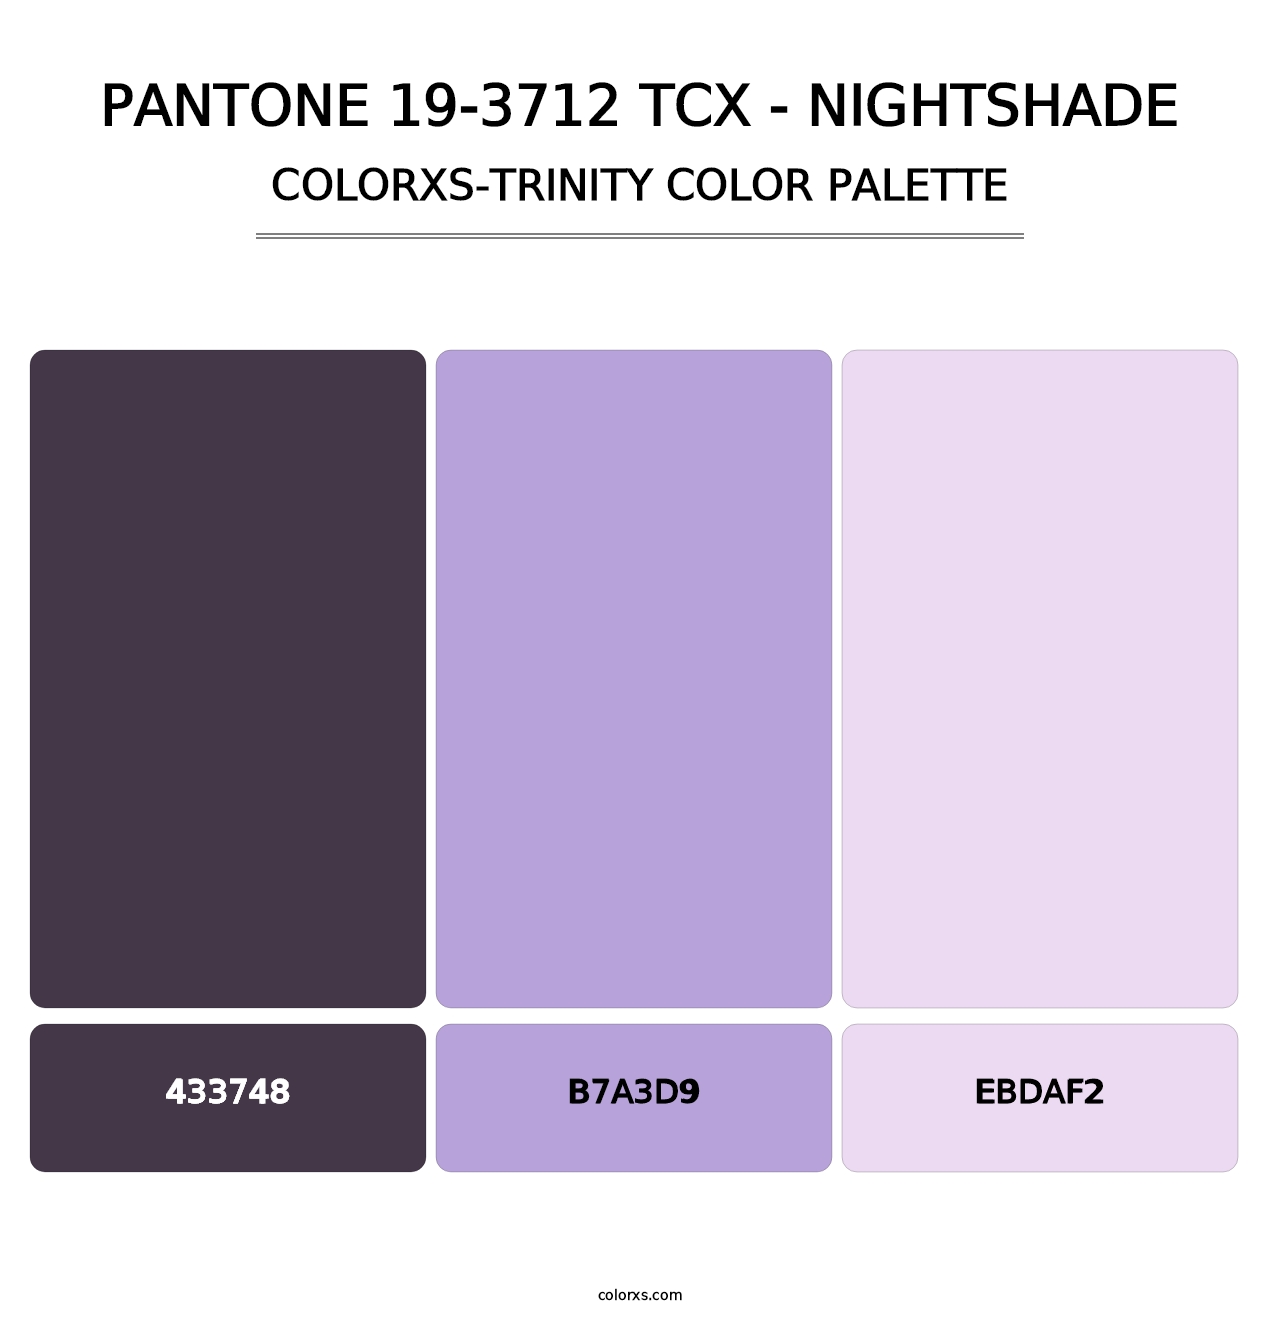 PANTONE 19-3712 TCX - Nightshade - Colorxs Trinity Palette